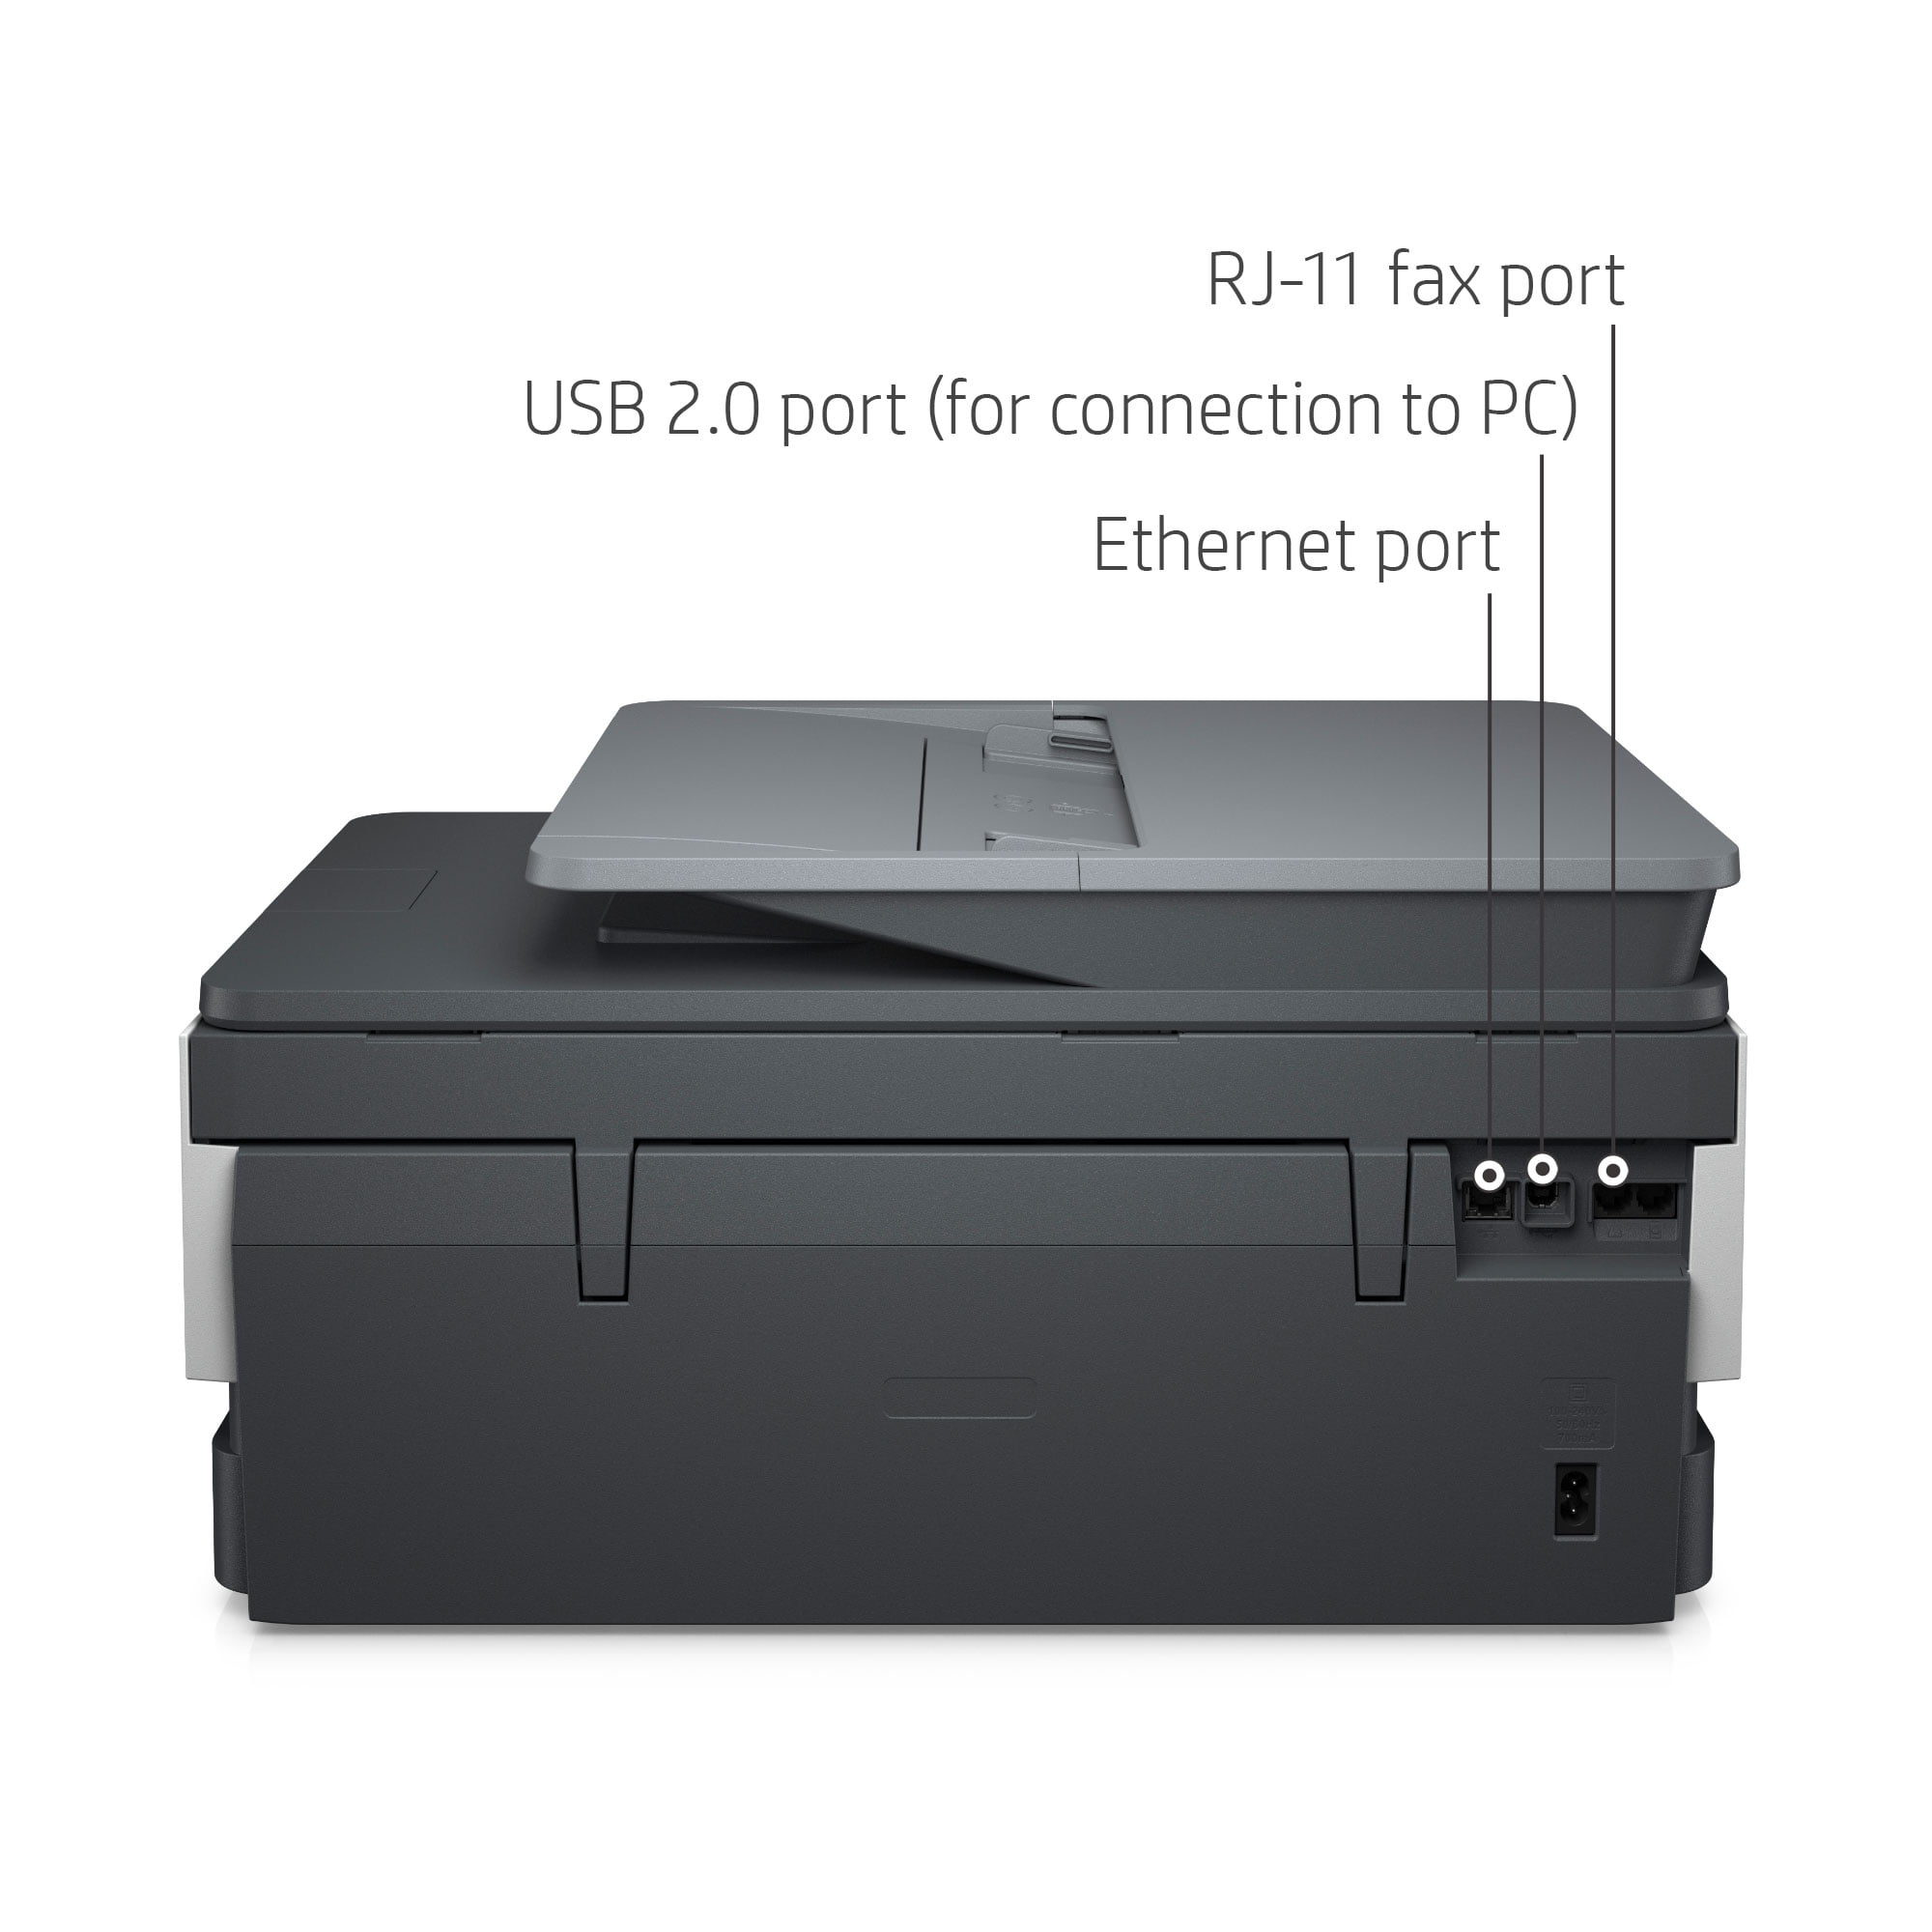 HP OfficeJet Pro 7720 specifications